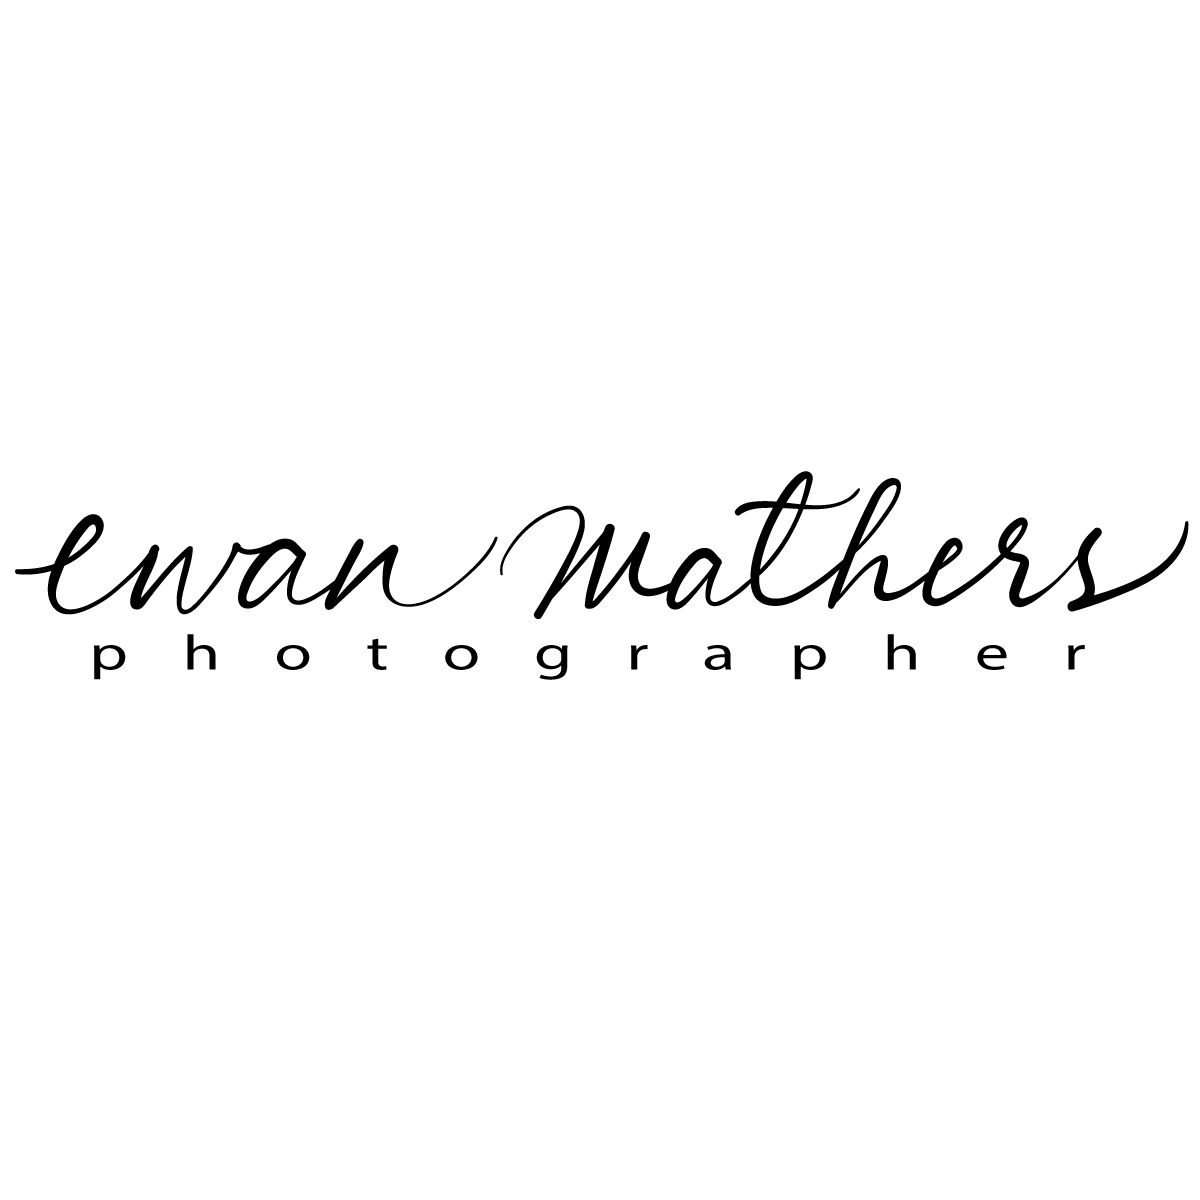 Ewan Mathers - Photographer logo